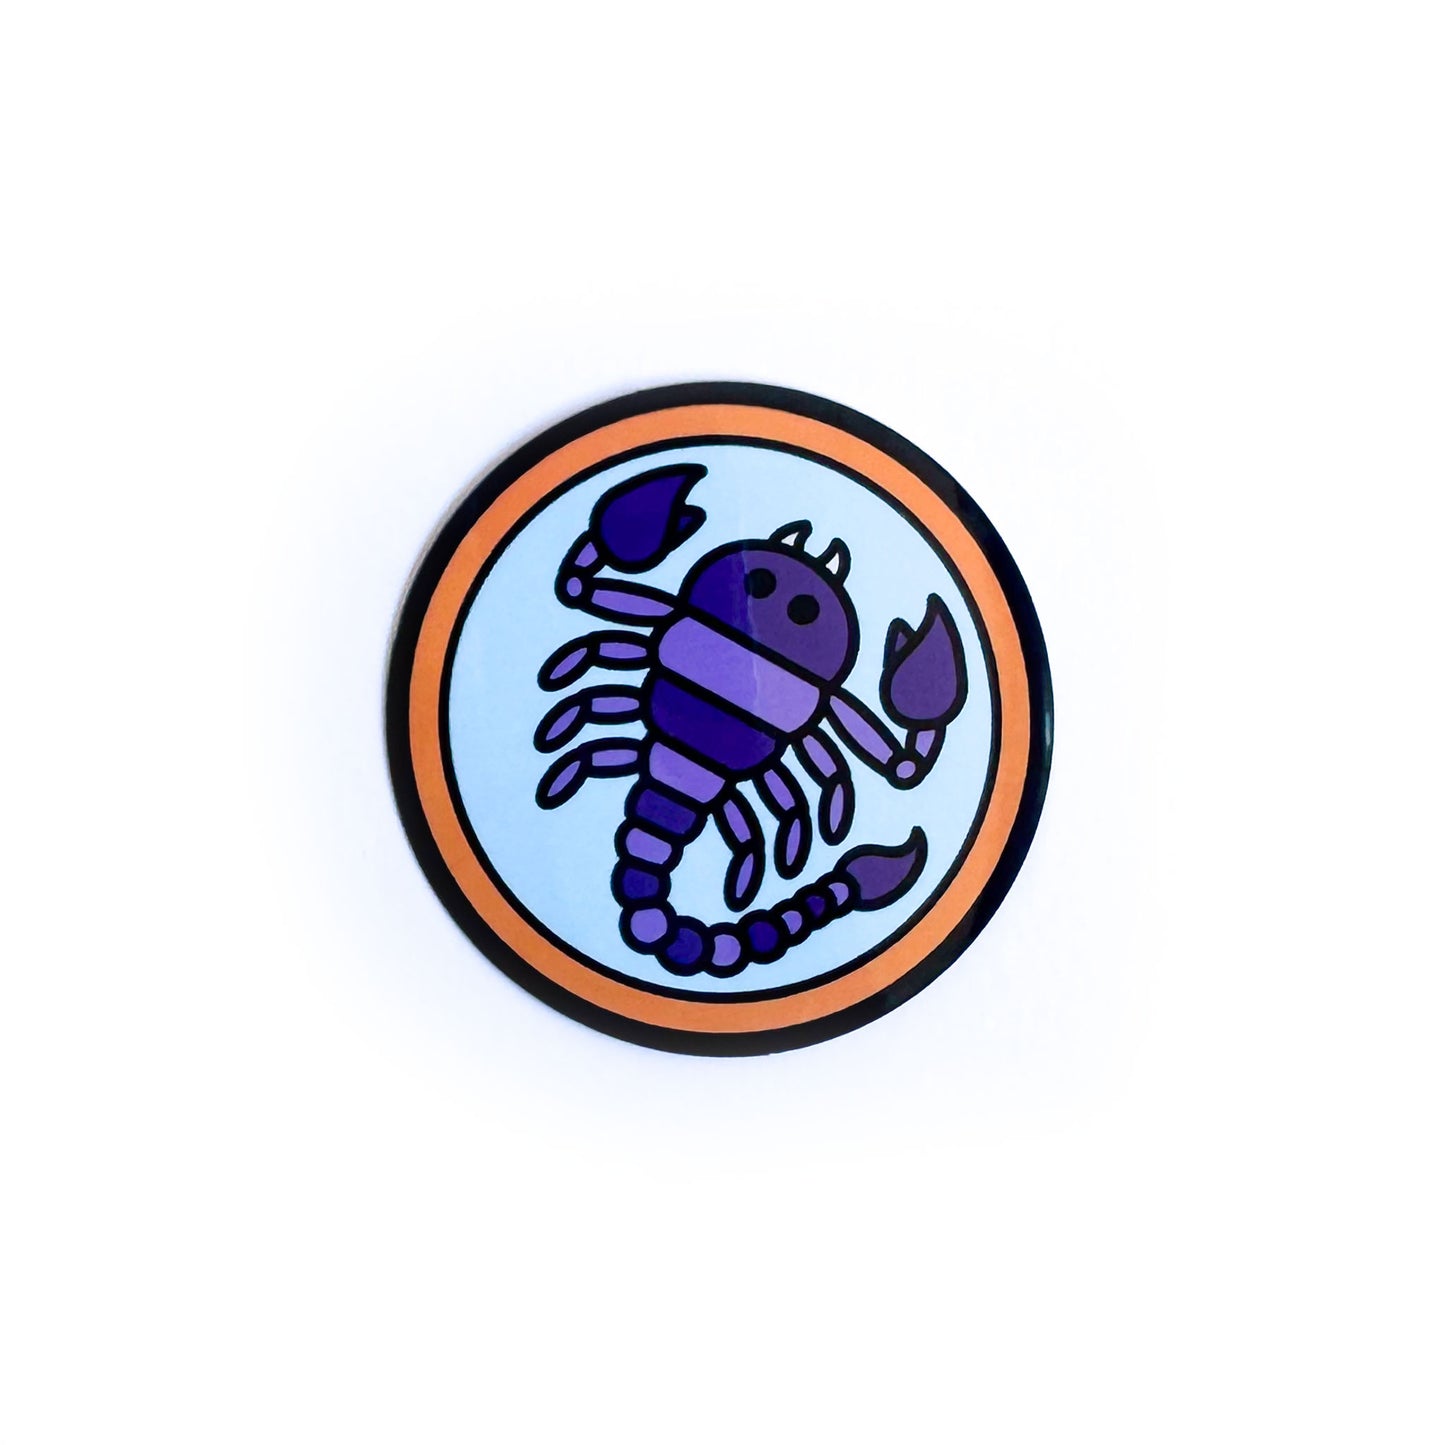 A circle sticker with a purple scorpion in it meant to symbolize the Scorpio zodiac sign. 